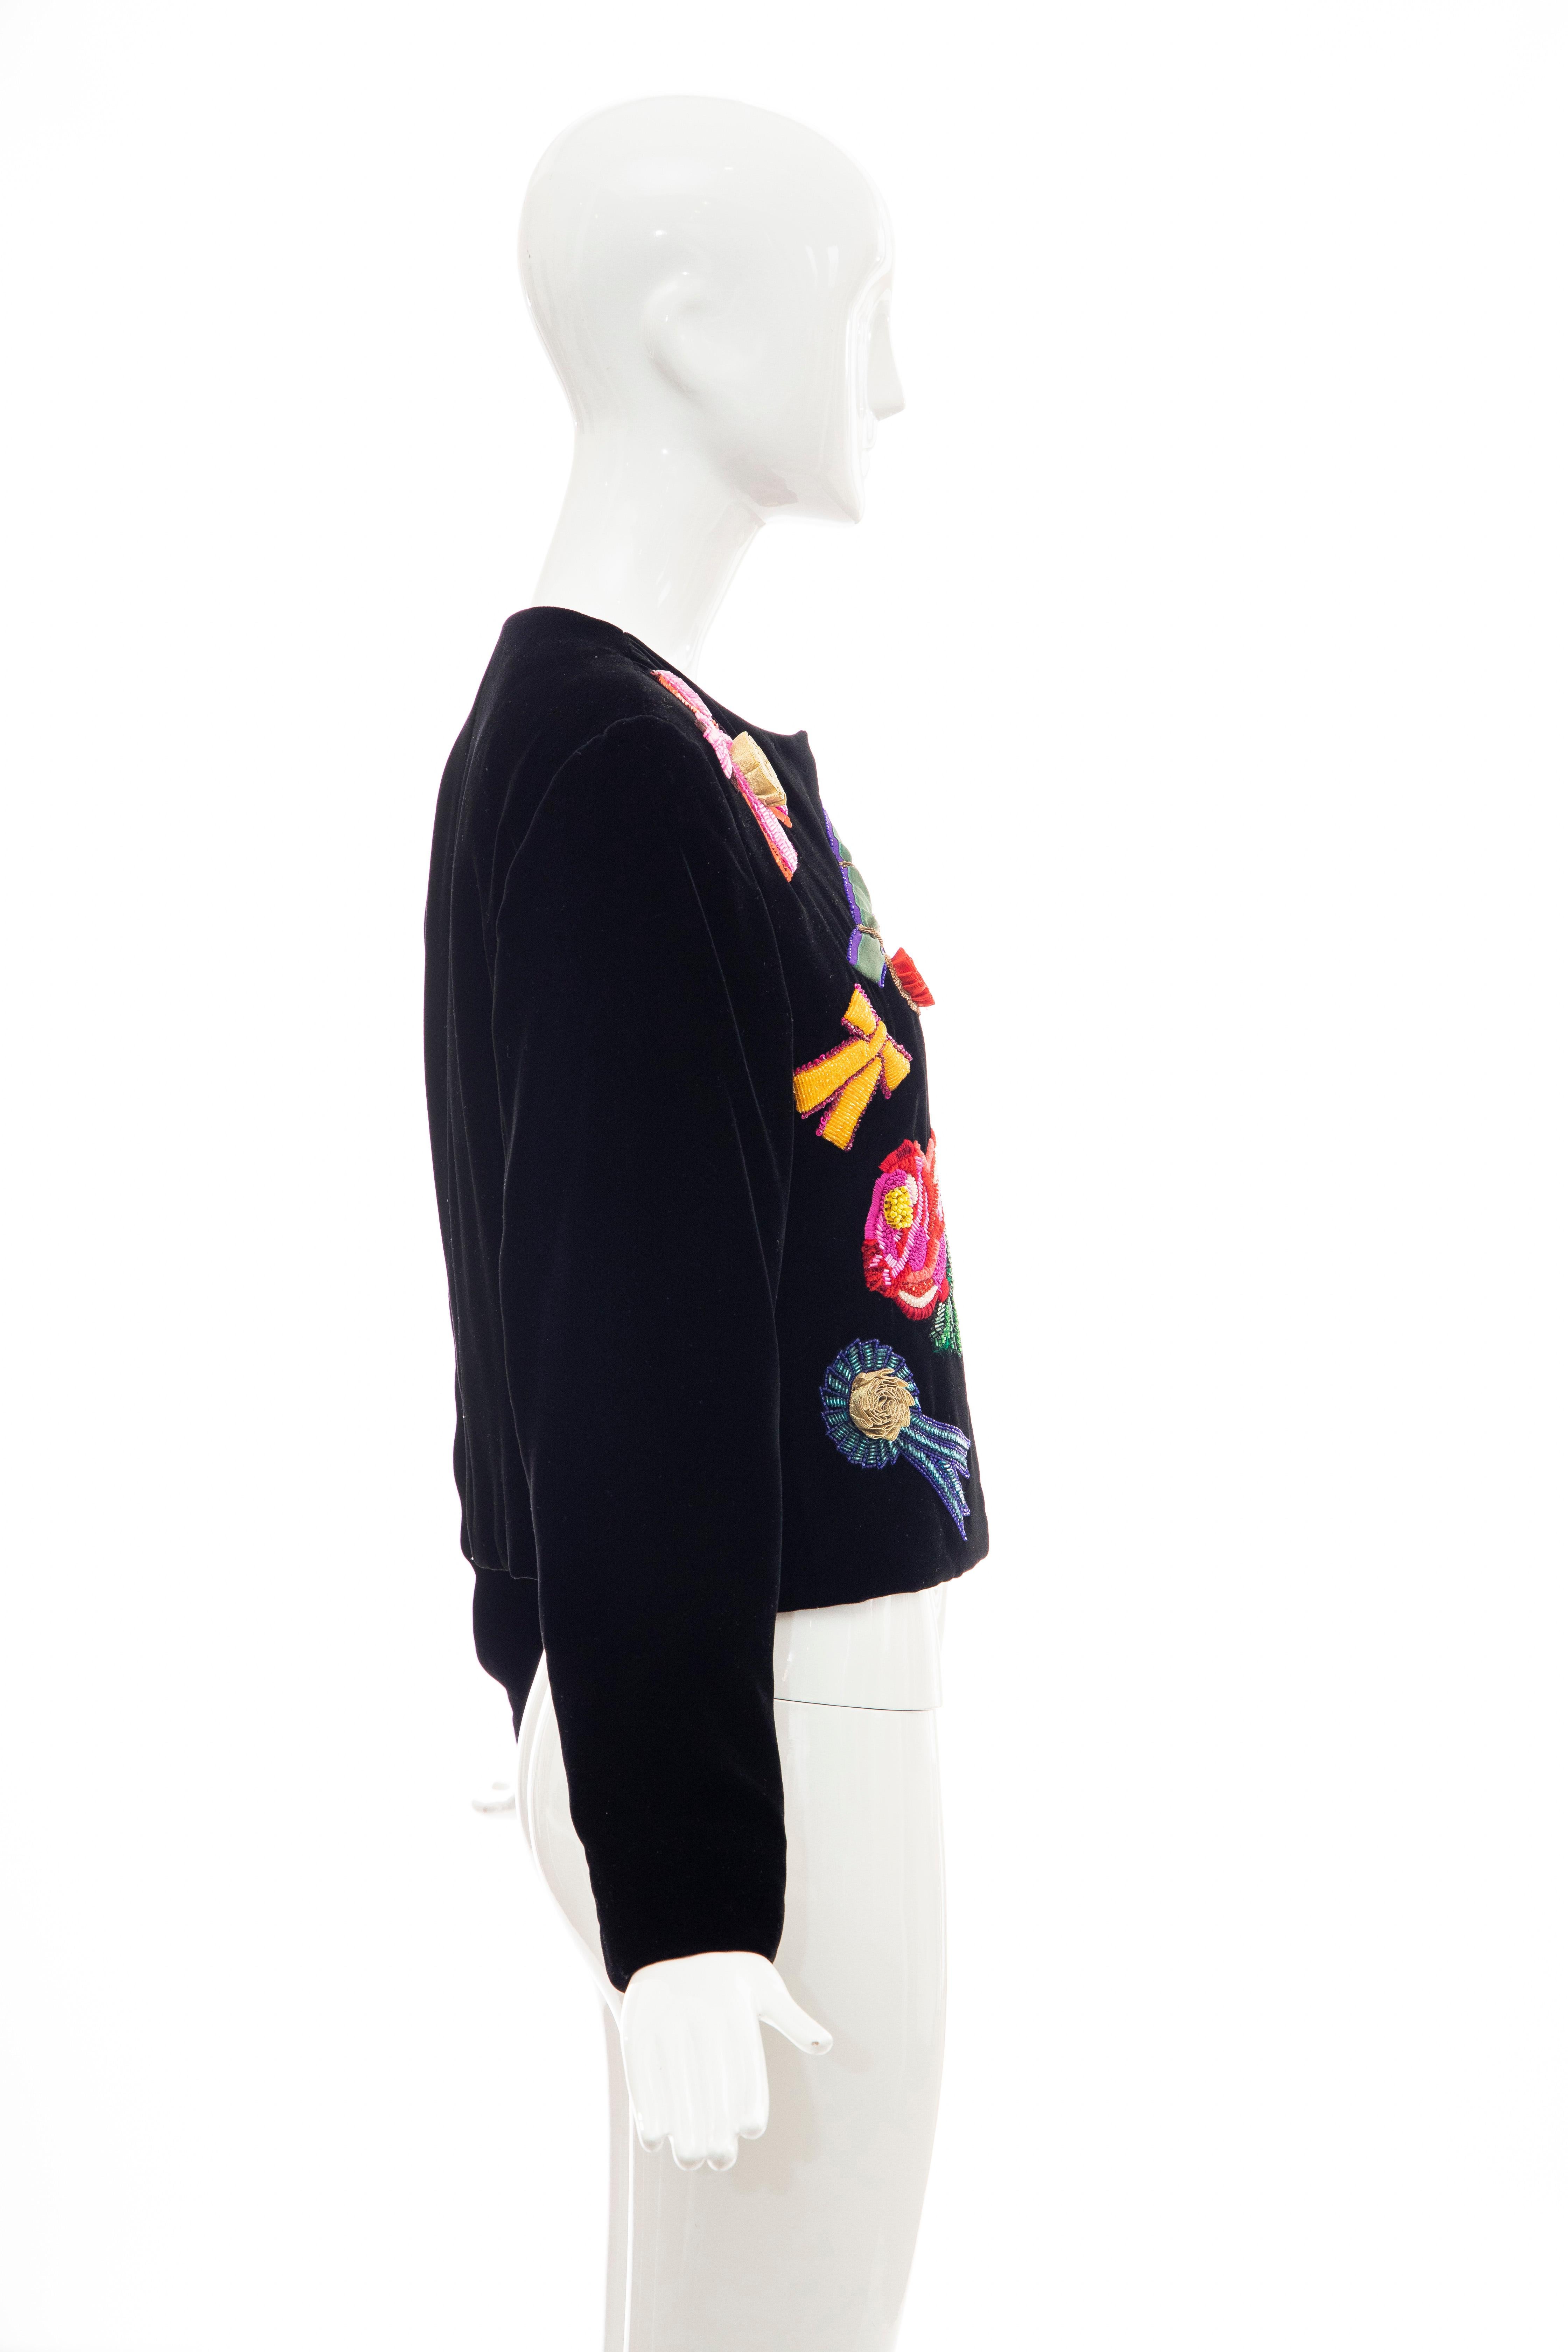 Christian Dior Marc Bohan Black Velvet Beaded Ribbon Embroidery Jacket, Fall 1988 1